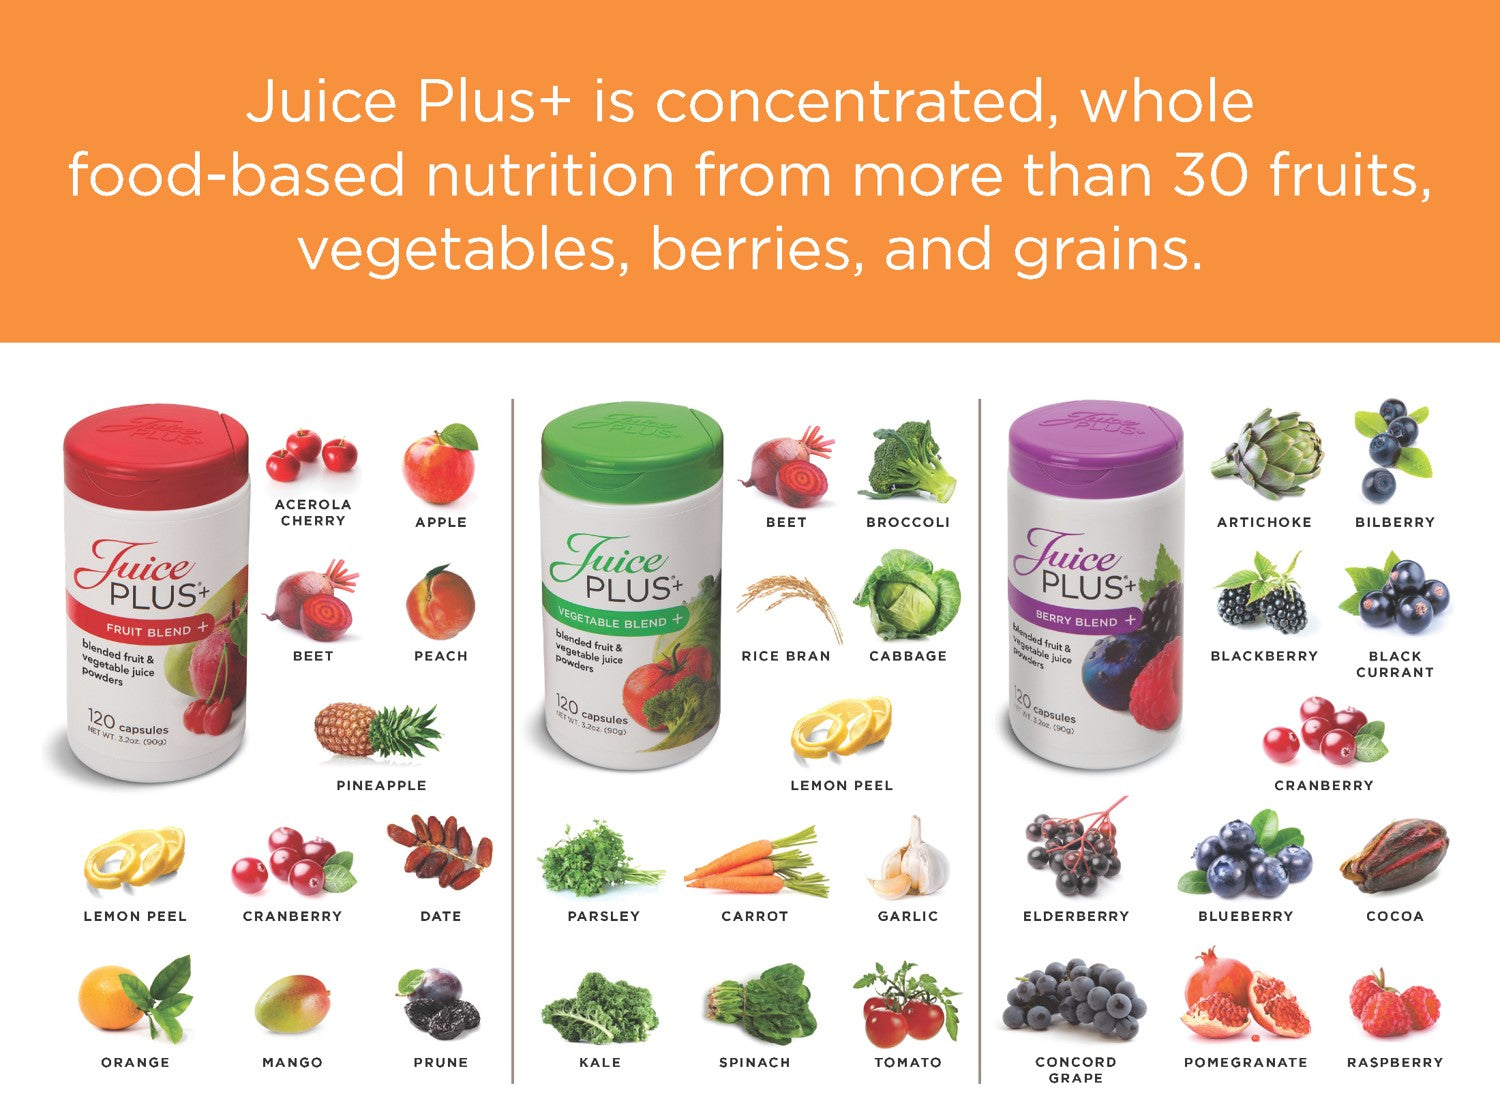 Juice Plus+ (Whole Food Nutrition) – Yucc' It Up! Equine Supplements